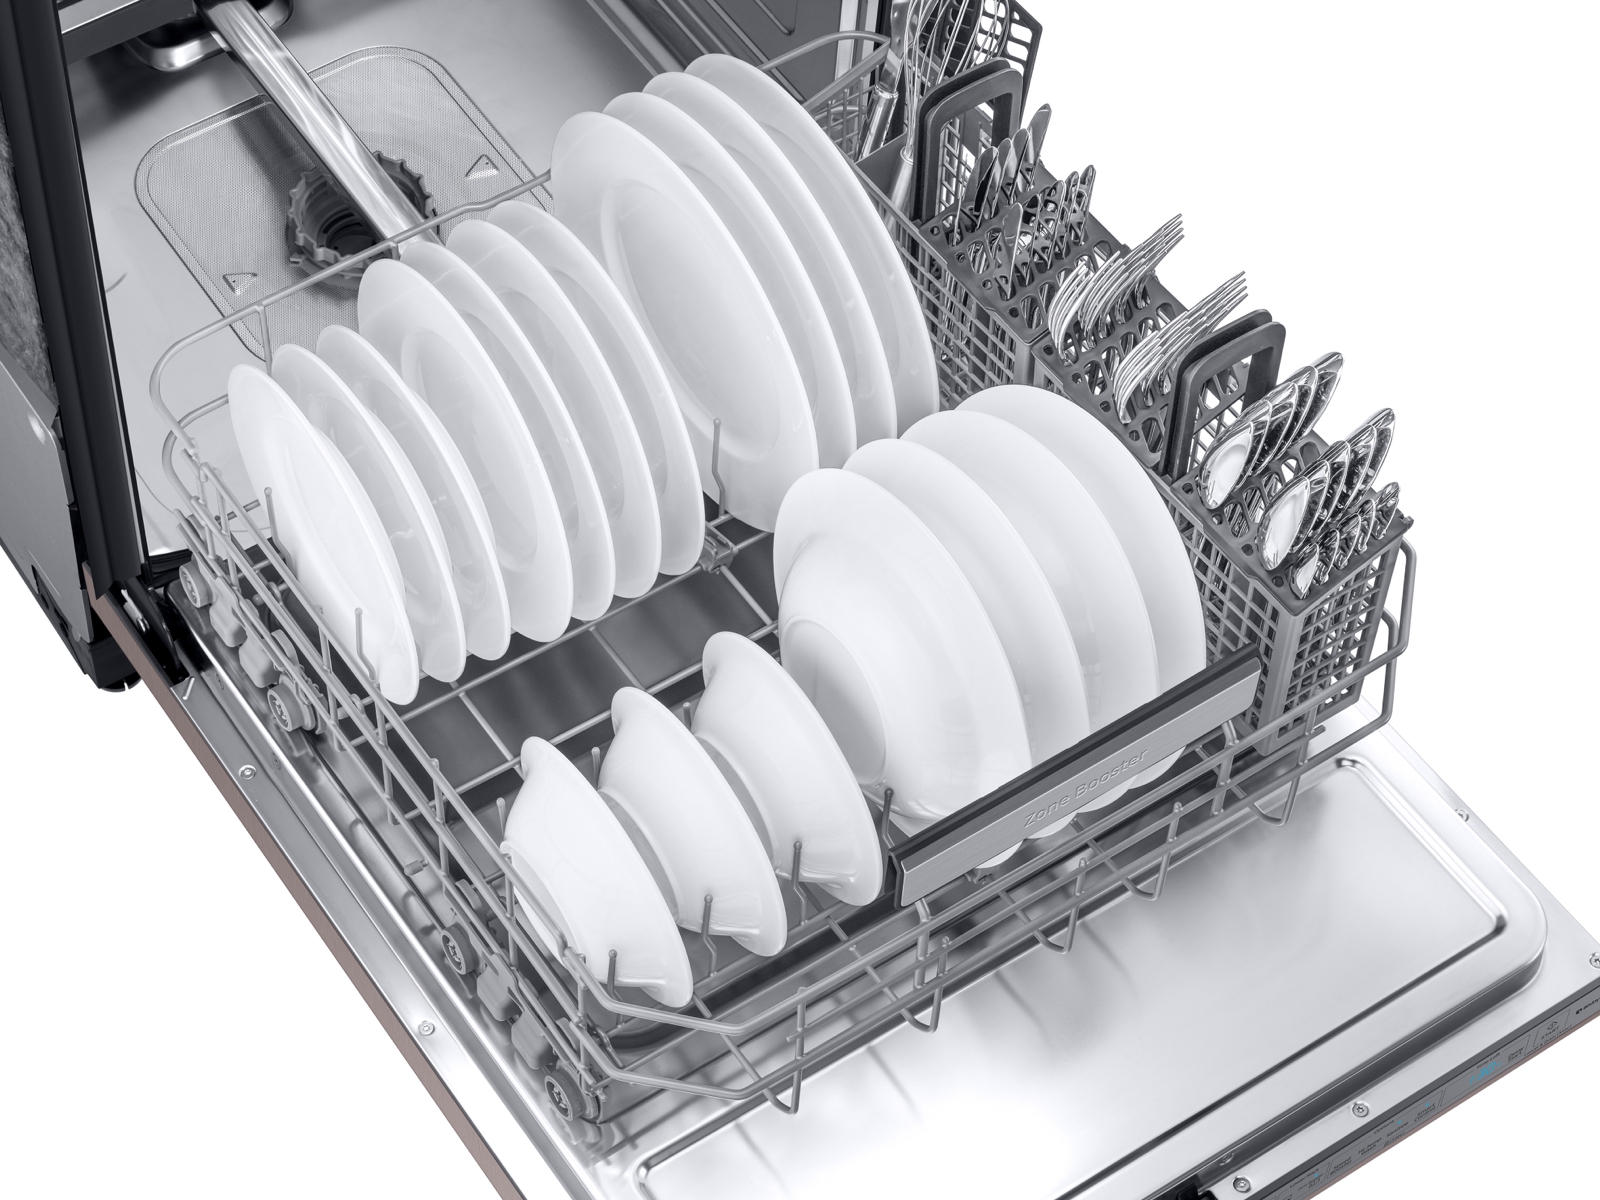 samsung 18 dishwasher